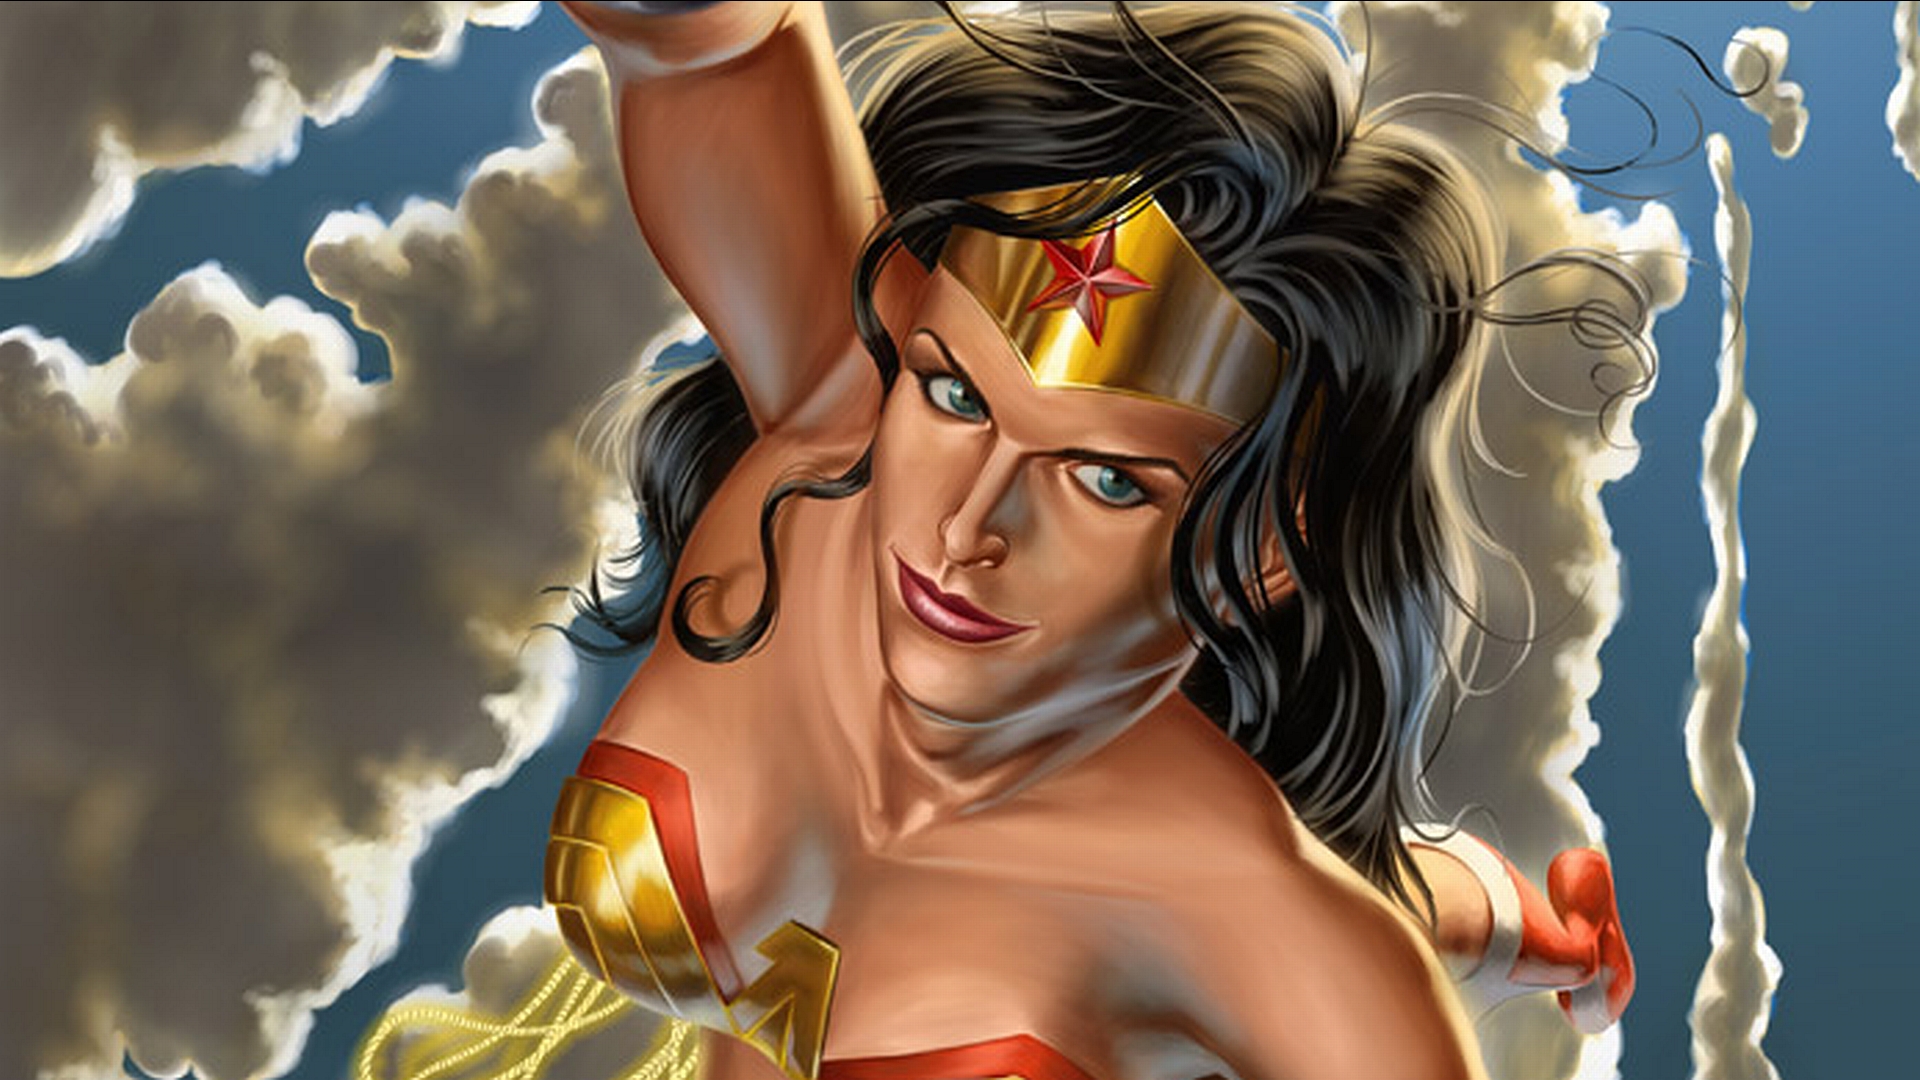 Comic-inspired Wonder Woman wallpaper